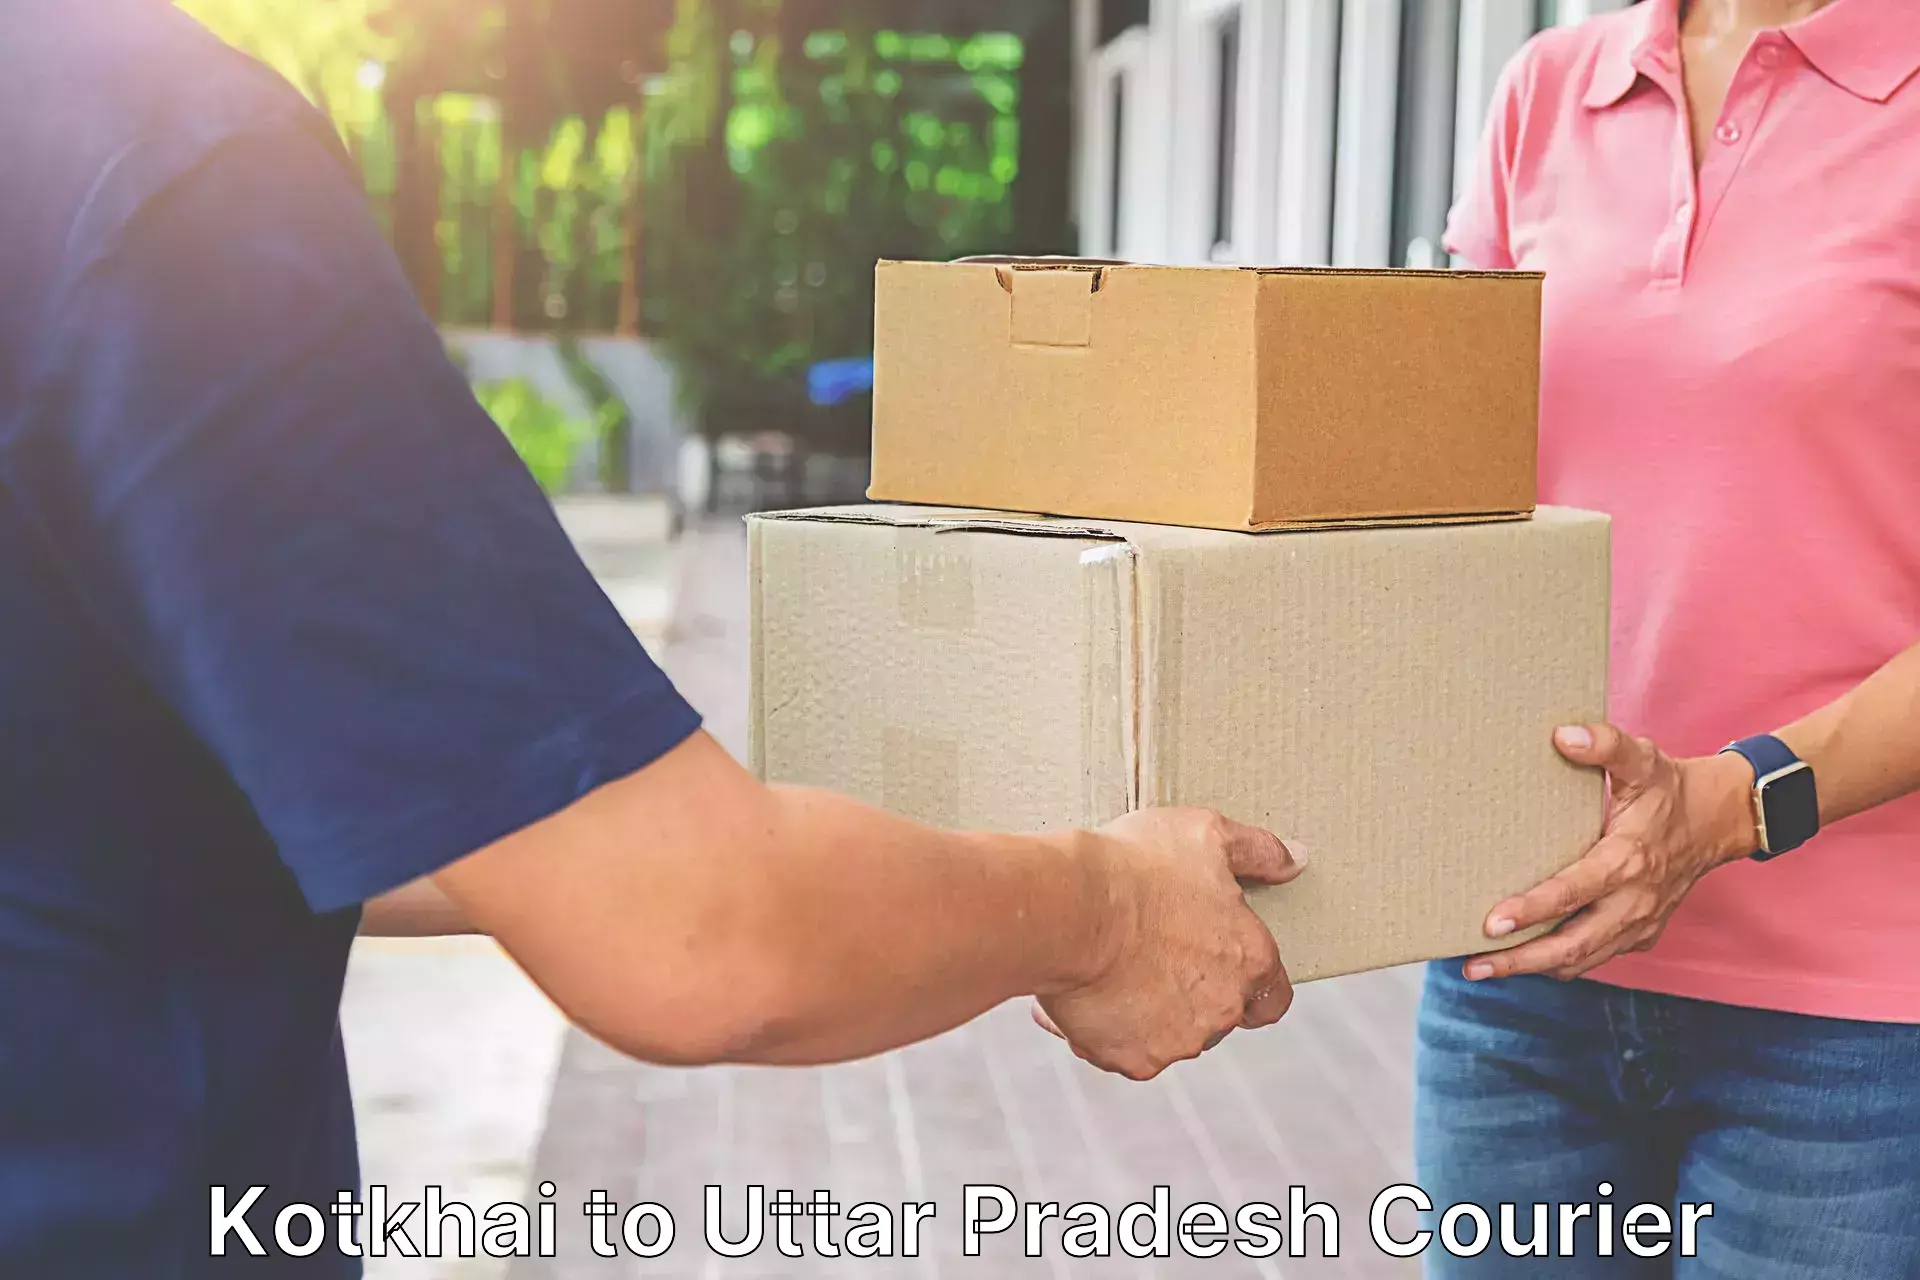 Customer-friendly courier services in Kotkhai to Koraon